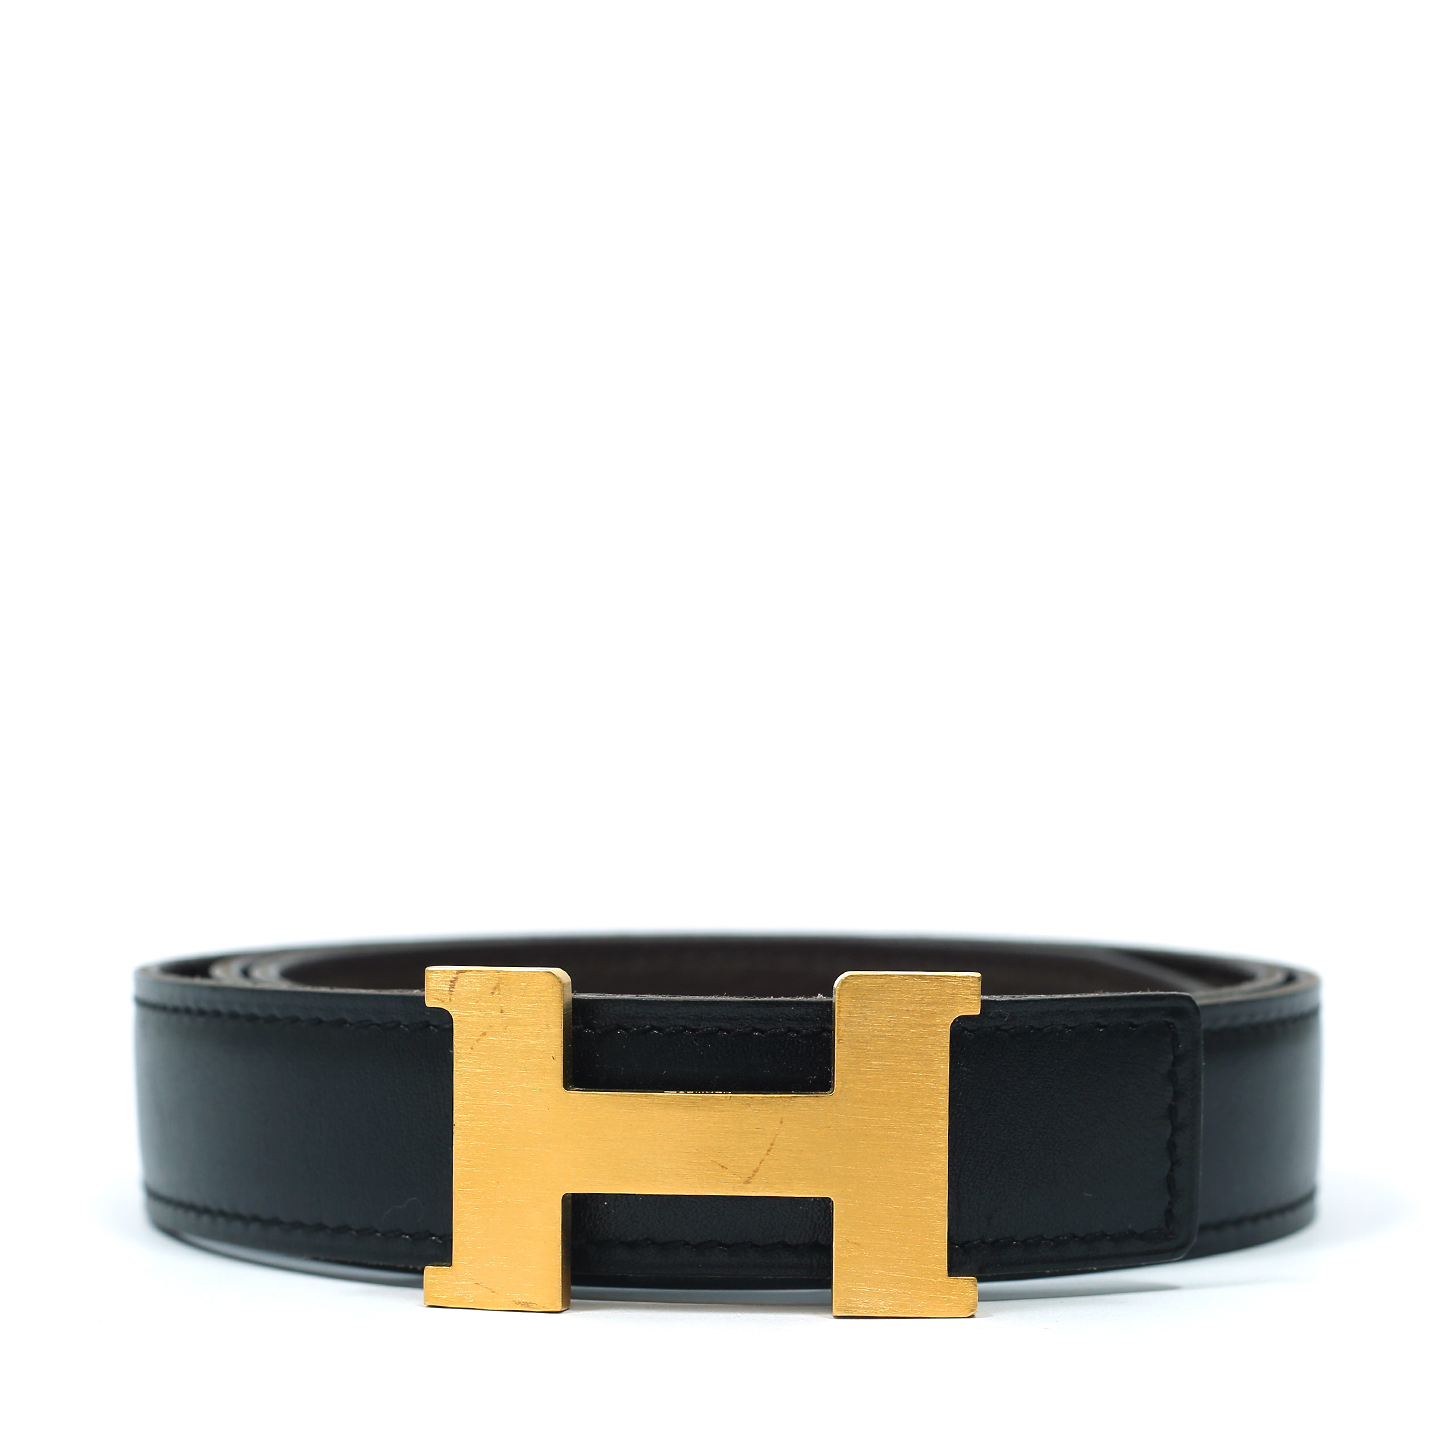 Hermes 24mm Box Togo Leather Brushed Gold Plated Constance H Belt, Size ...